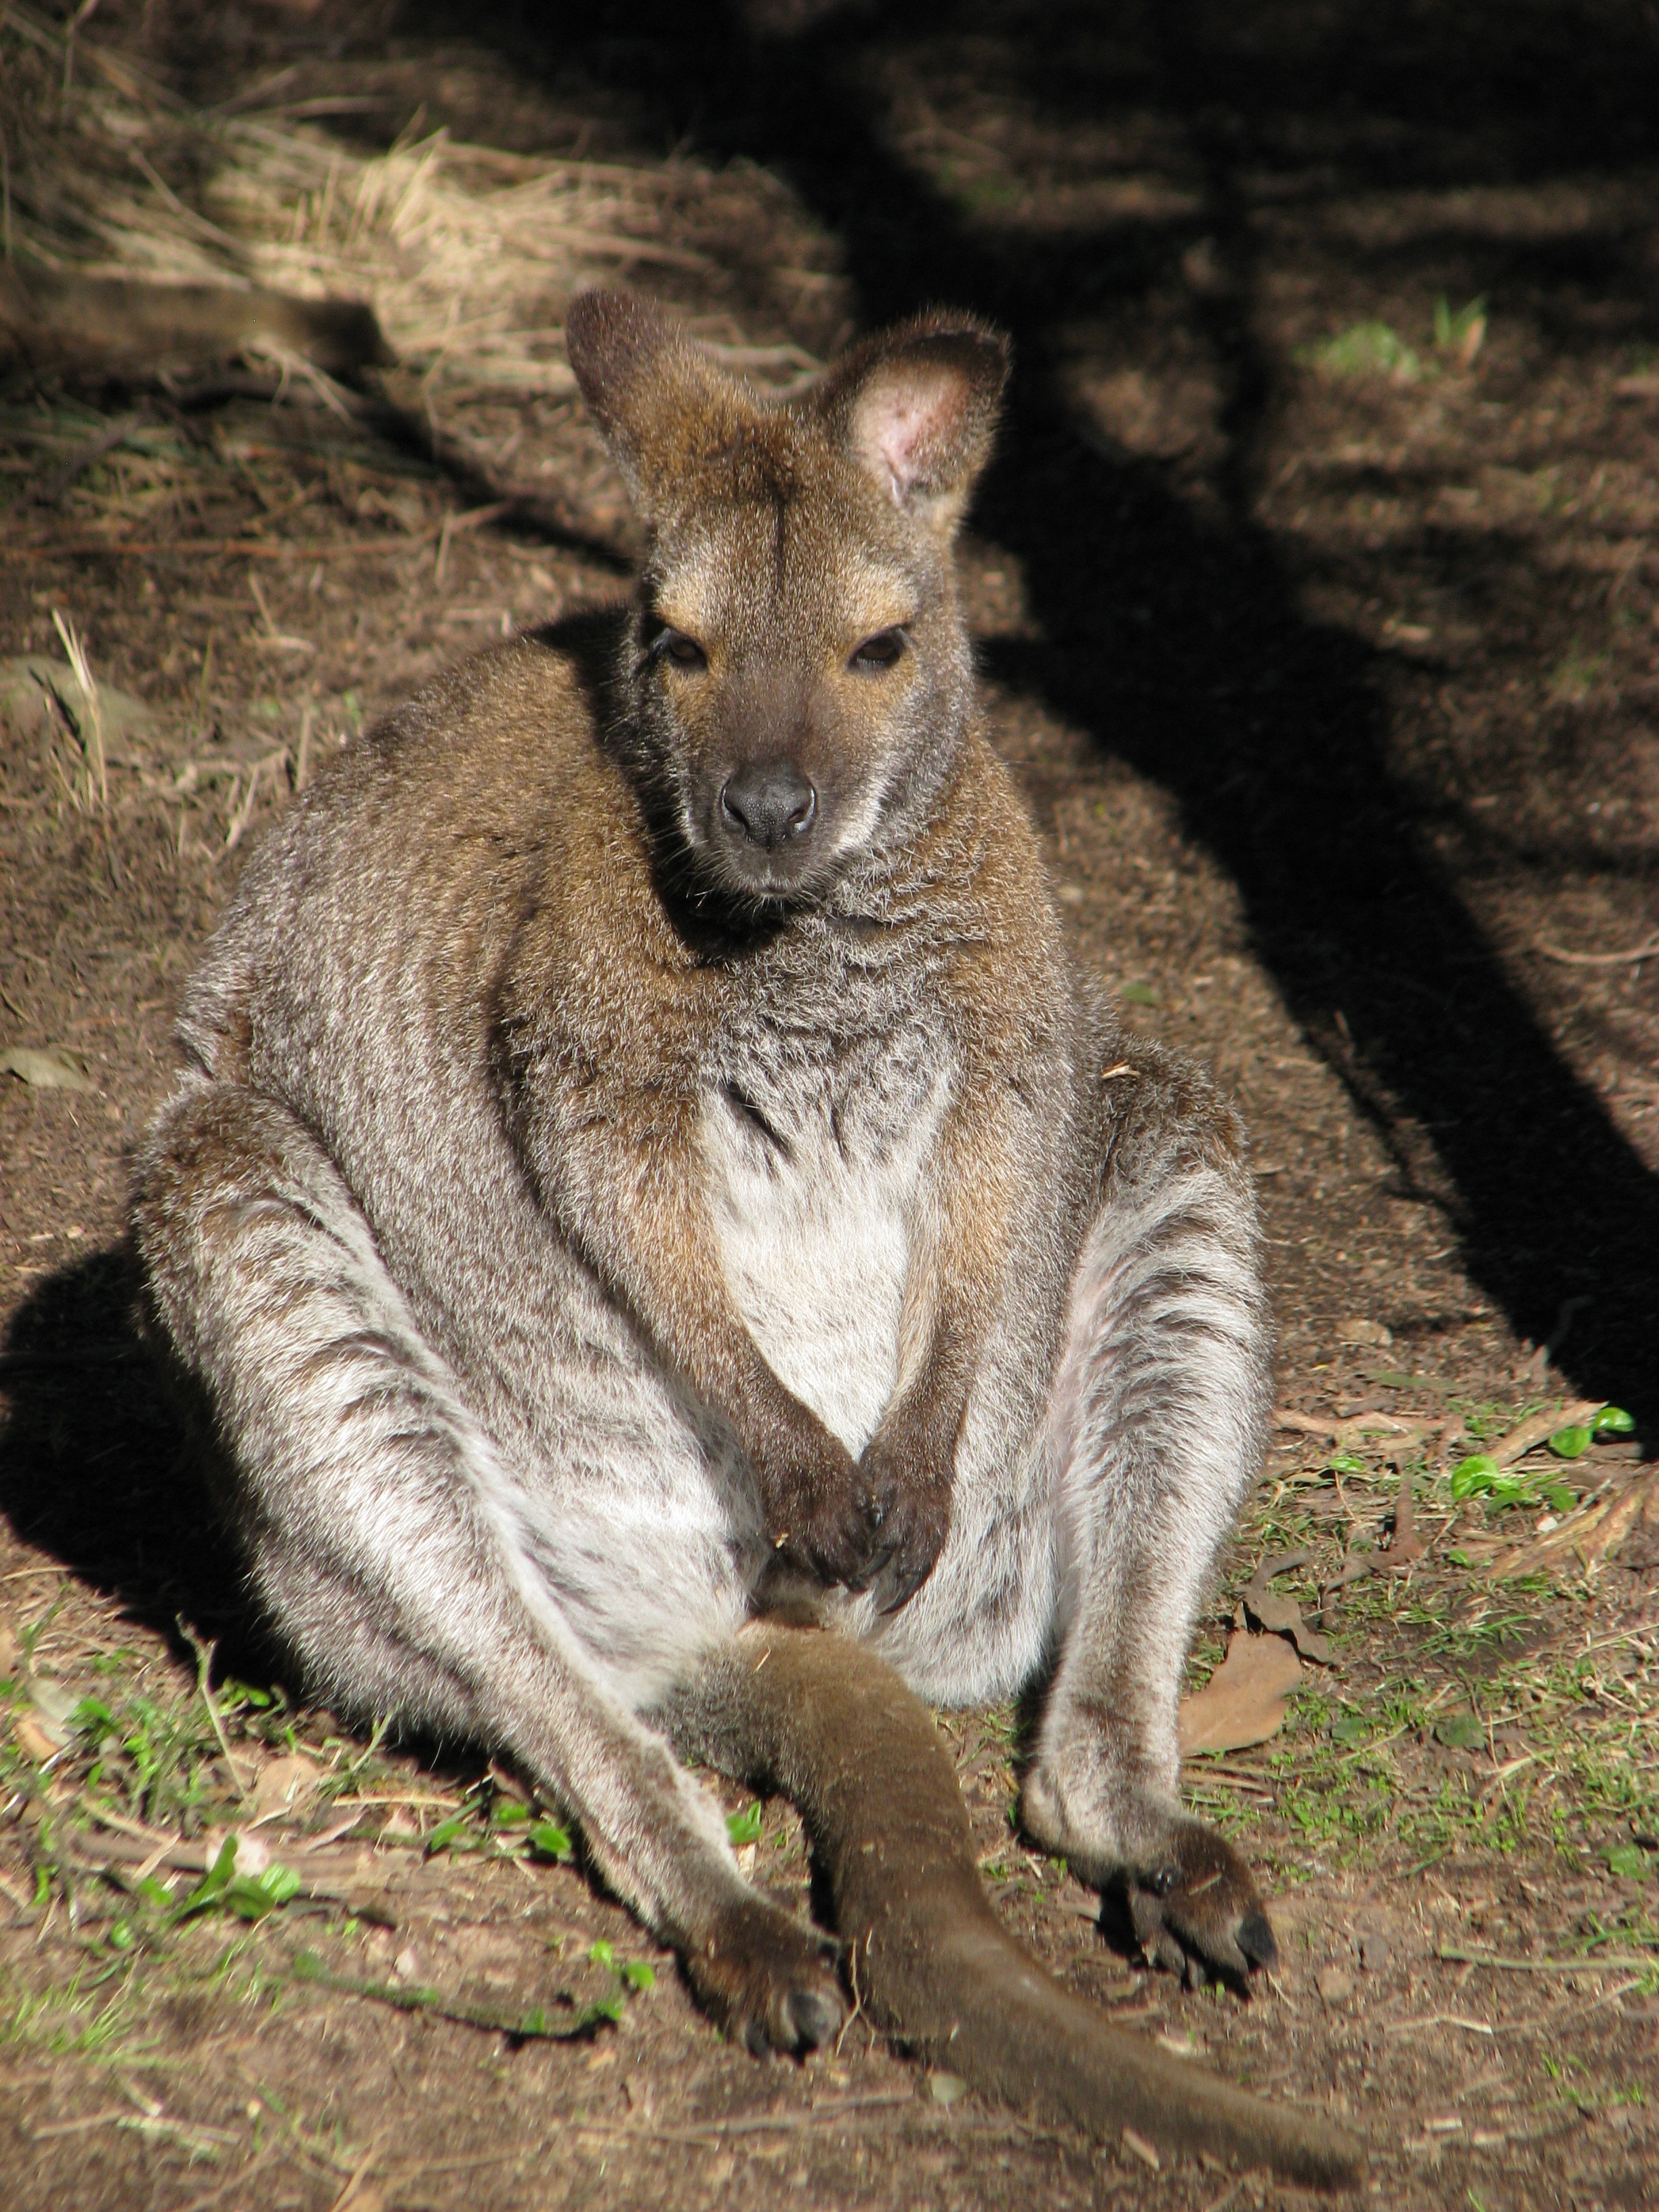 brown and white kangaroo